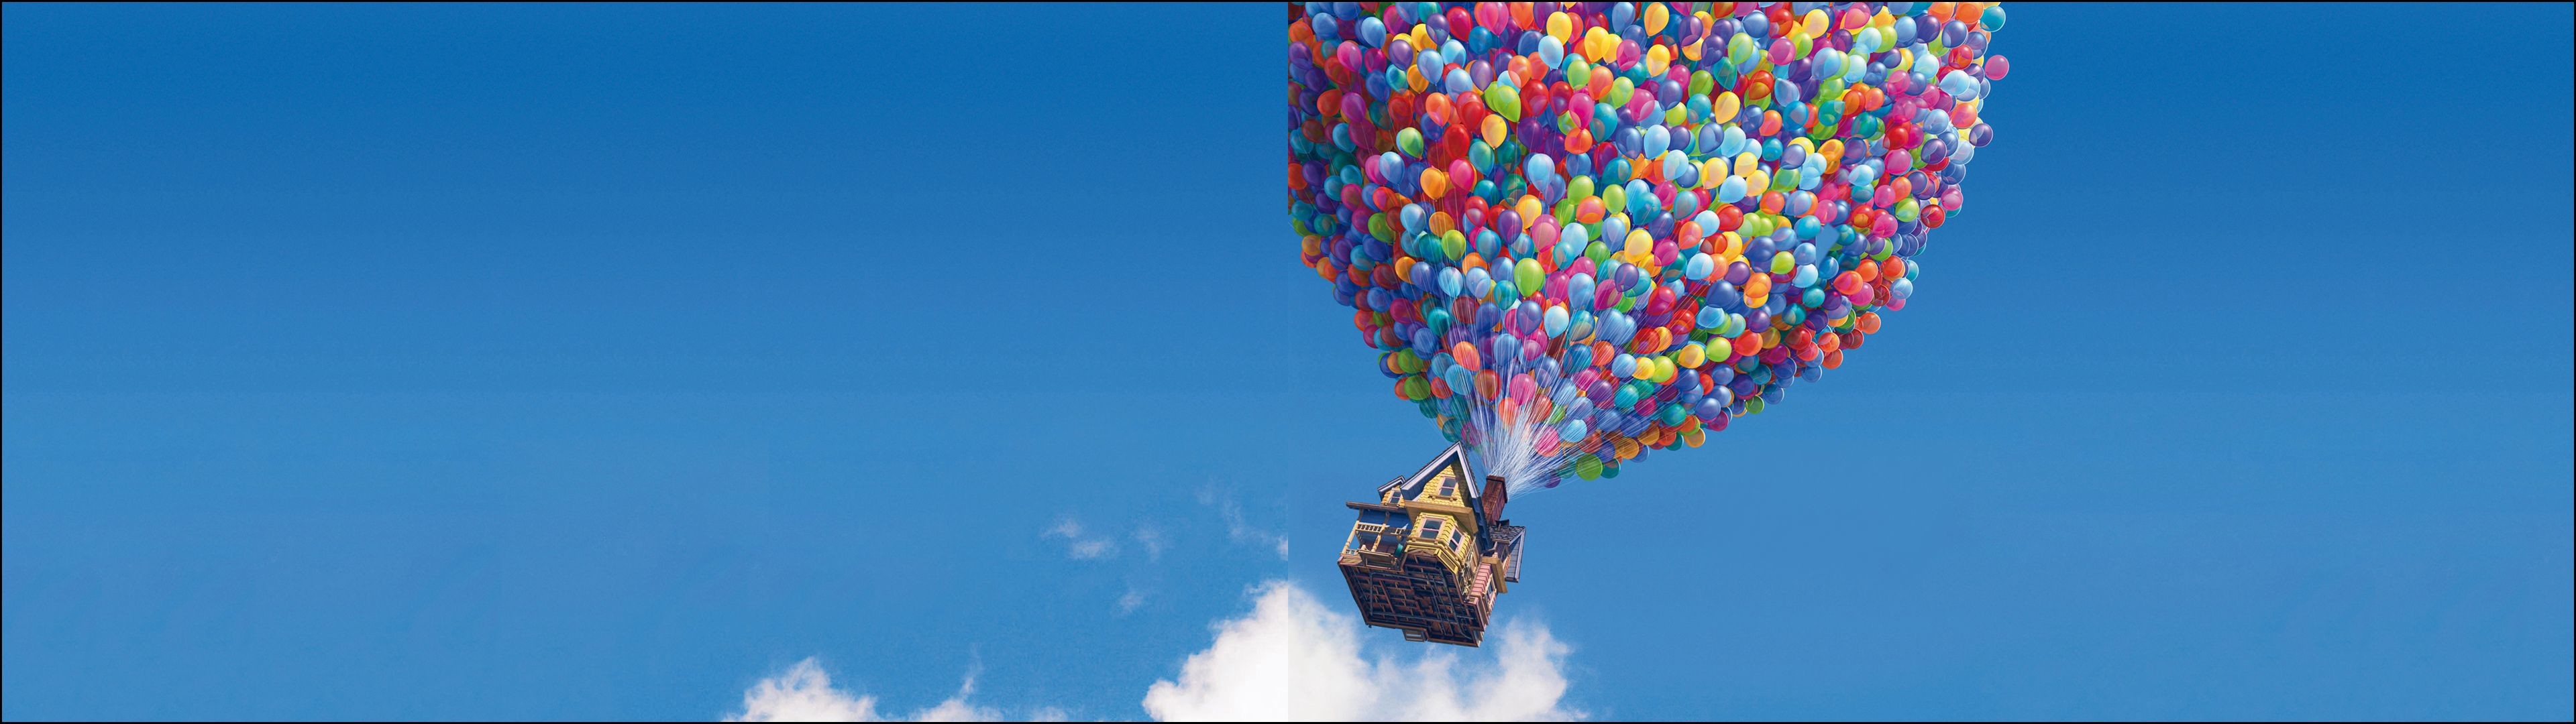 Pixar Up Wallpaper (62+ images)